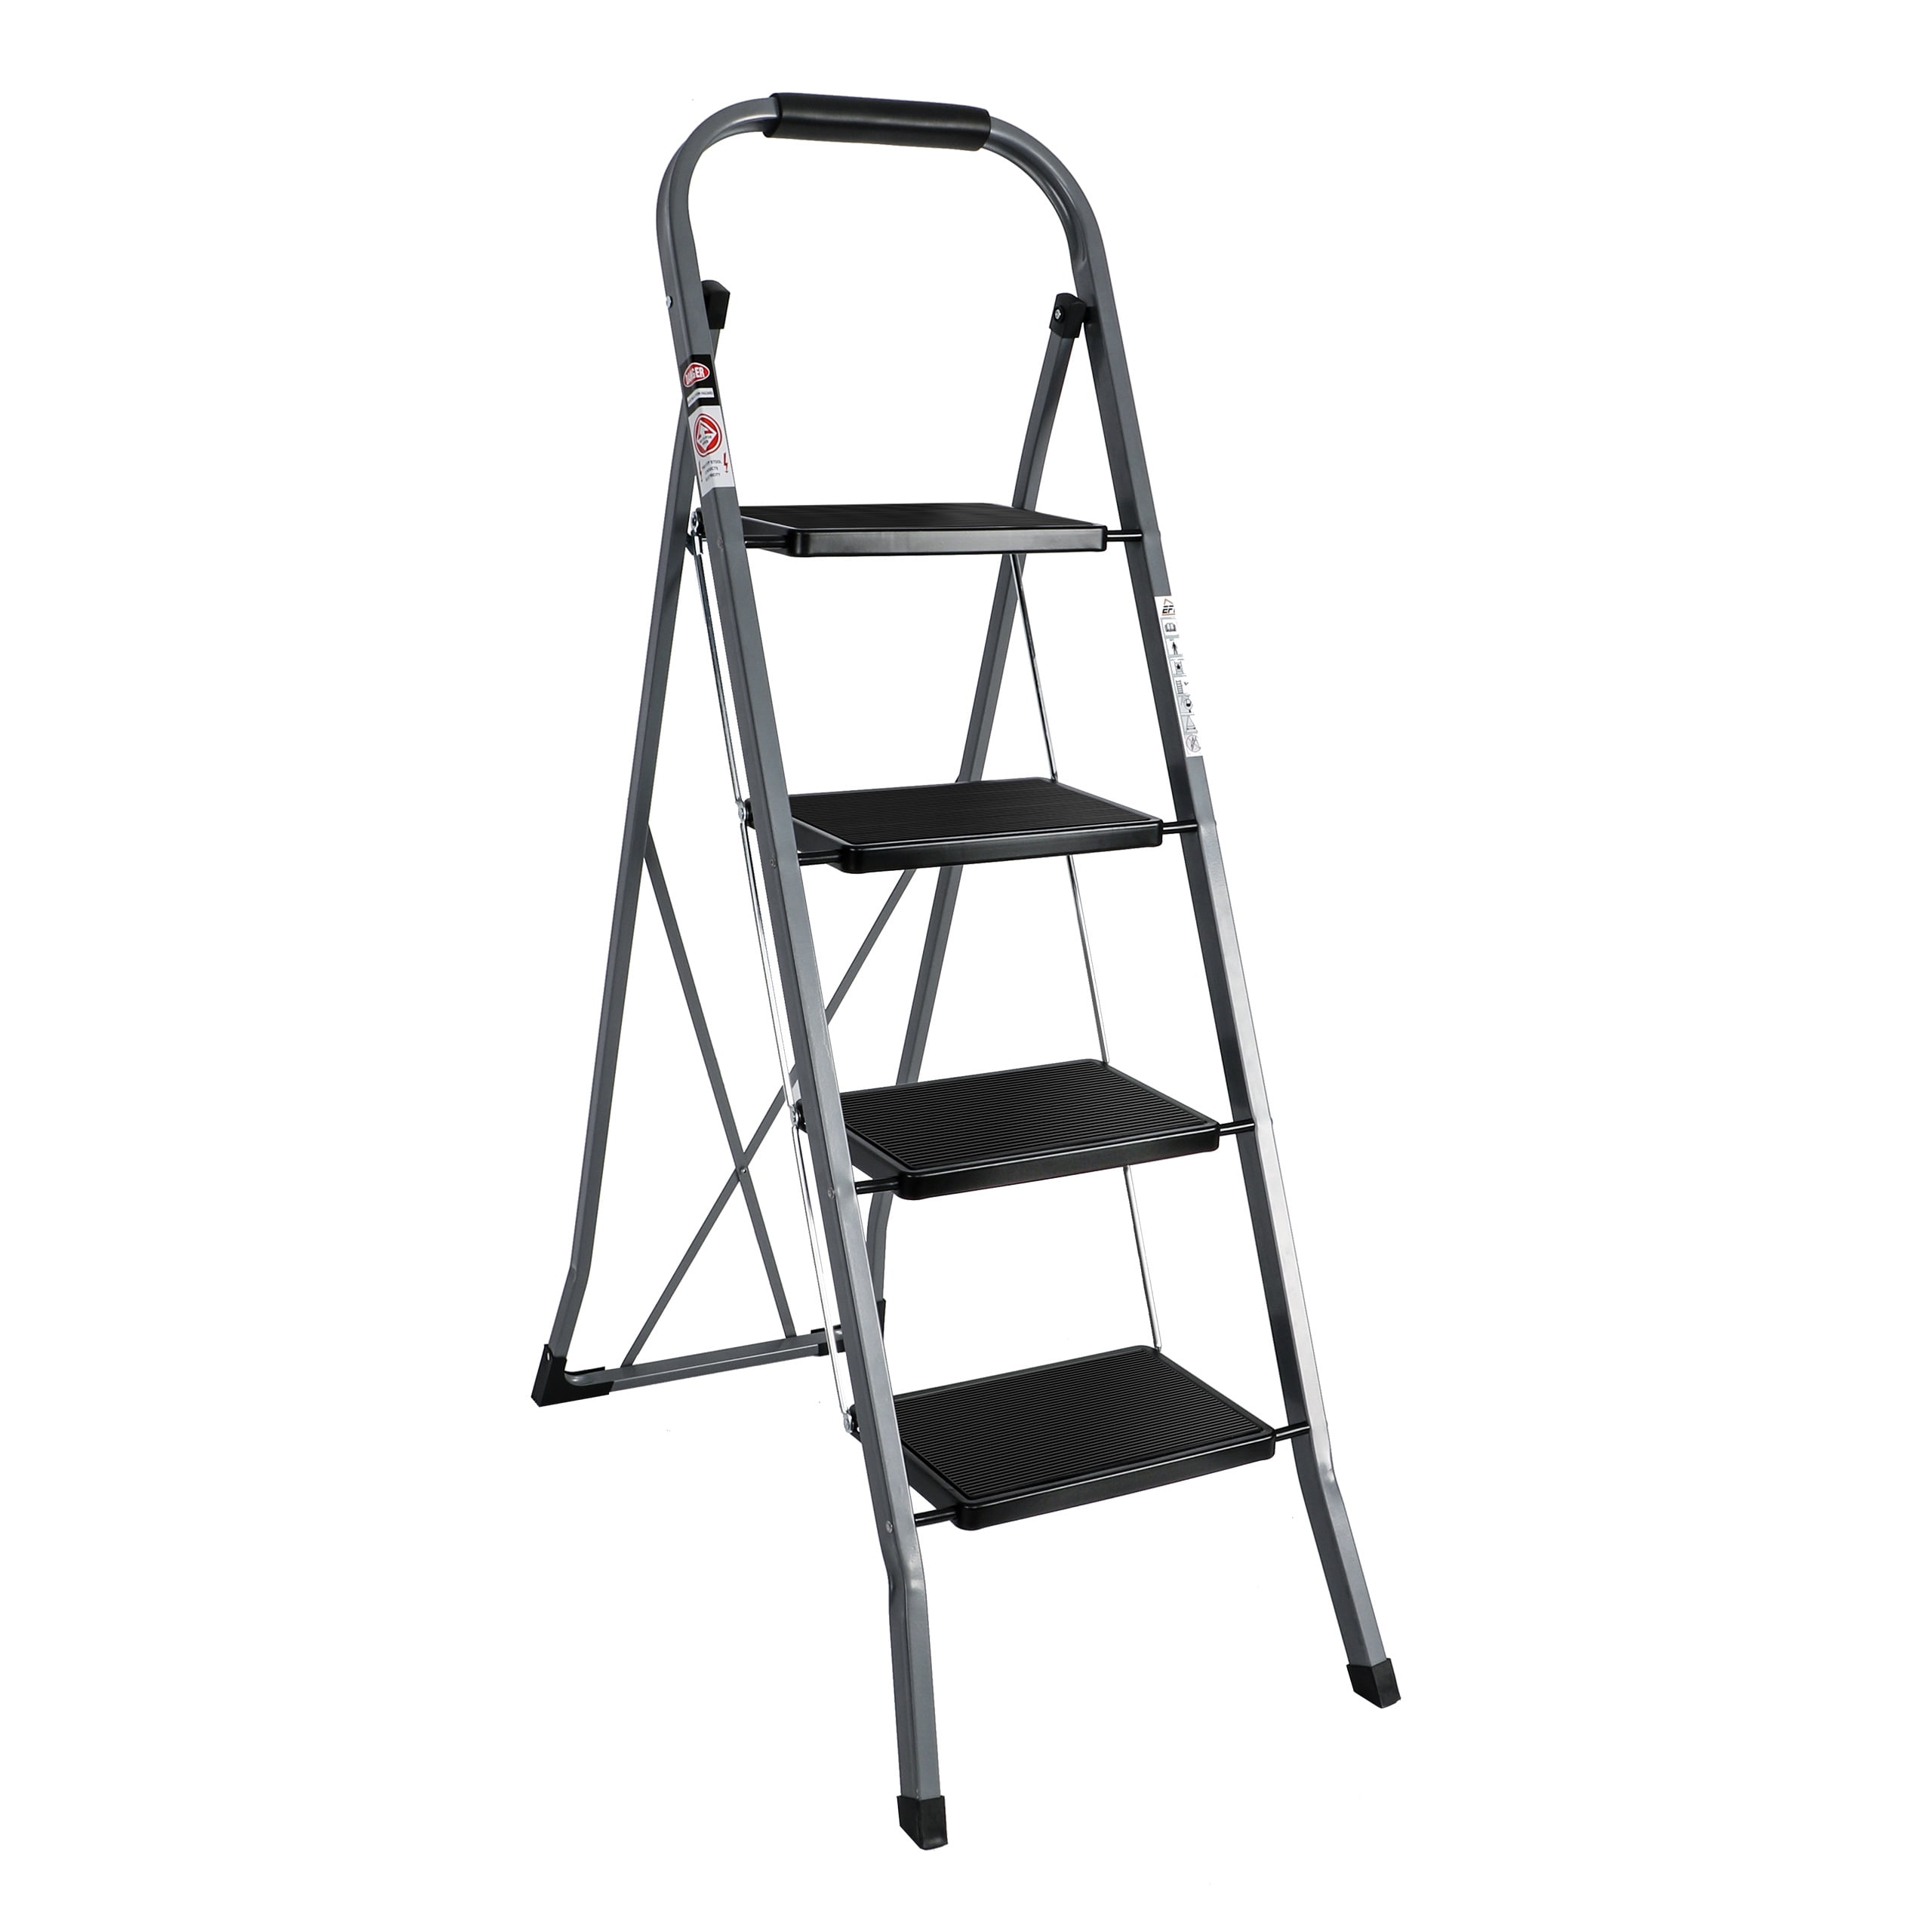 EFINE NO4 Step Ladder Slim Folding Step Stool Holding up to 330lbs. 